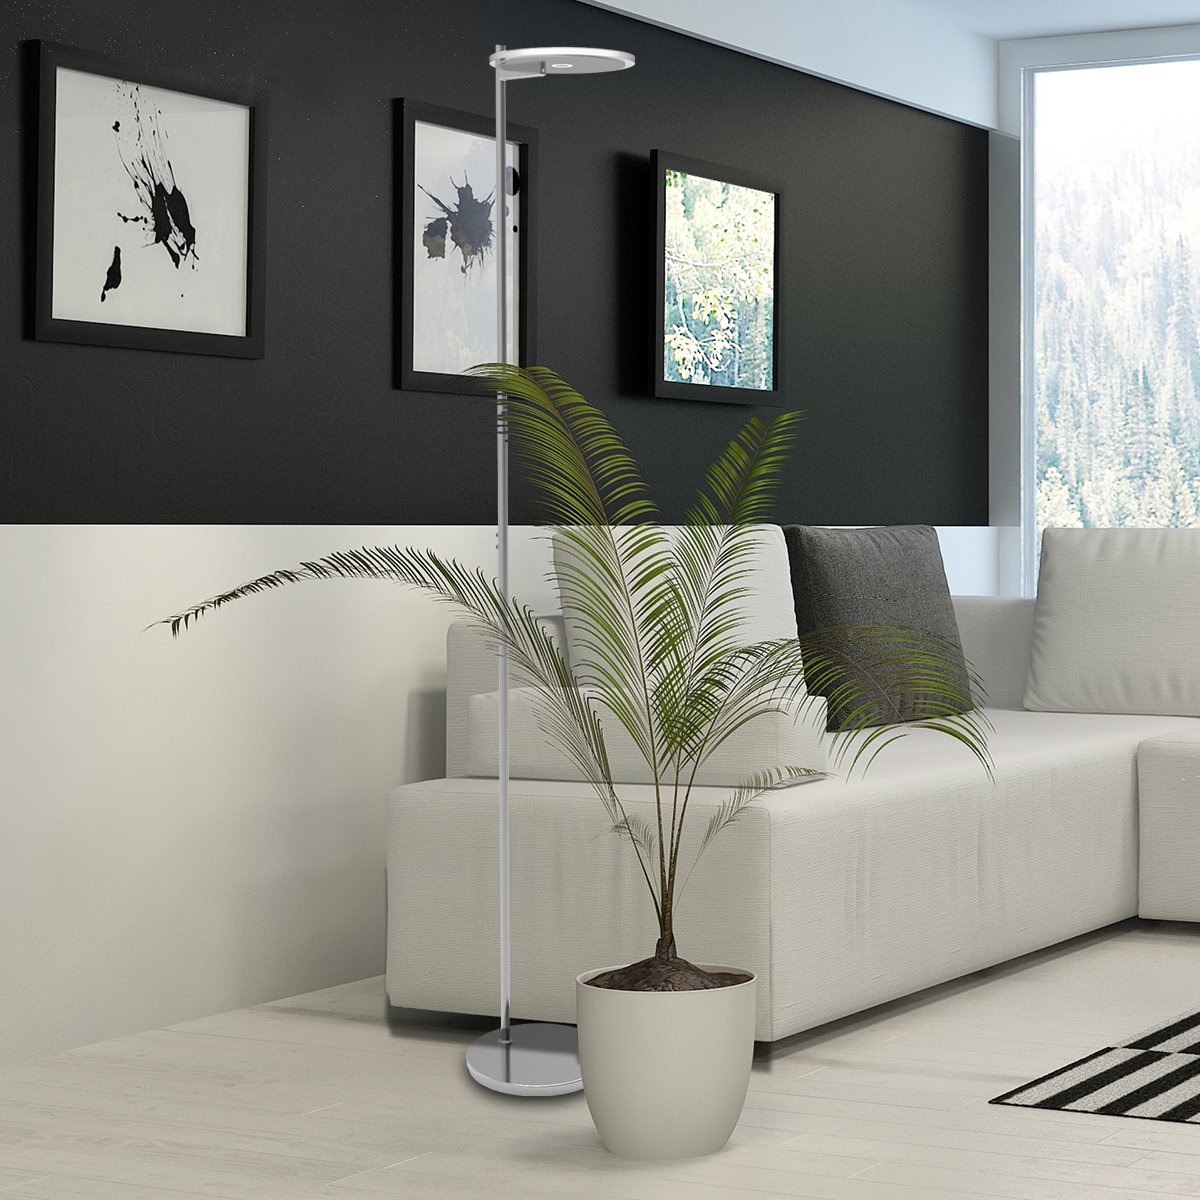 Vloerlamp - Bussandri Limited - Modern - Glas - Modern - LED - L: 27cm - Voor Binnen - Woonkamer - Eetkamer - Zilver